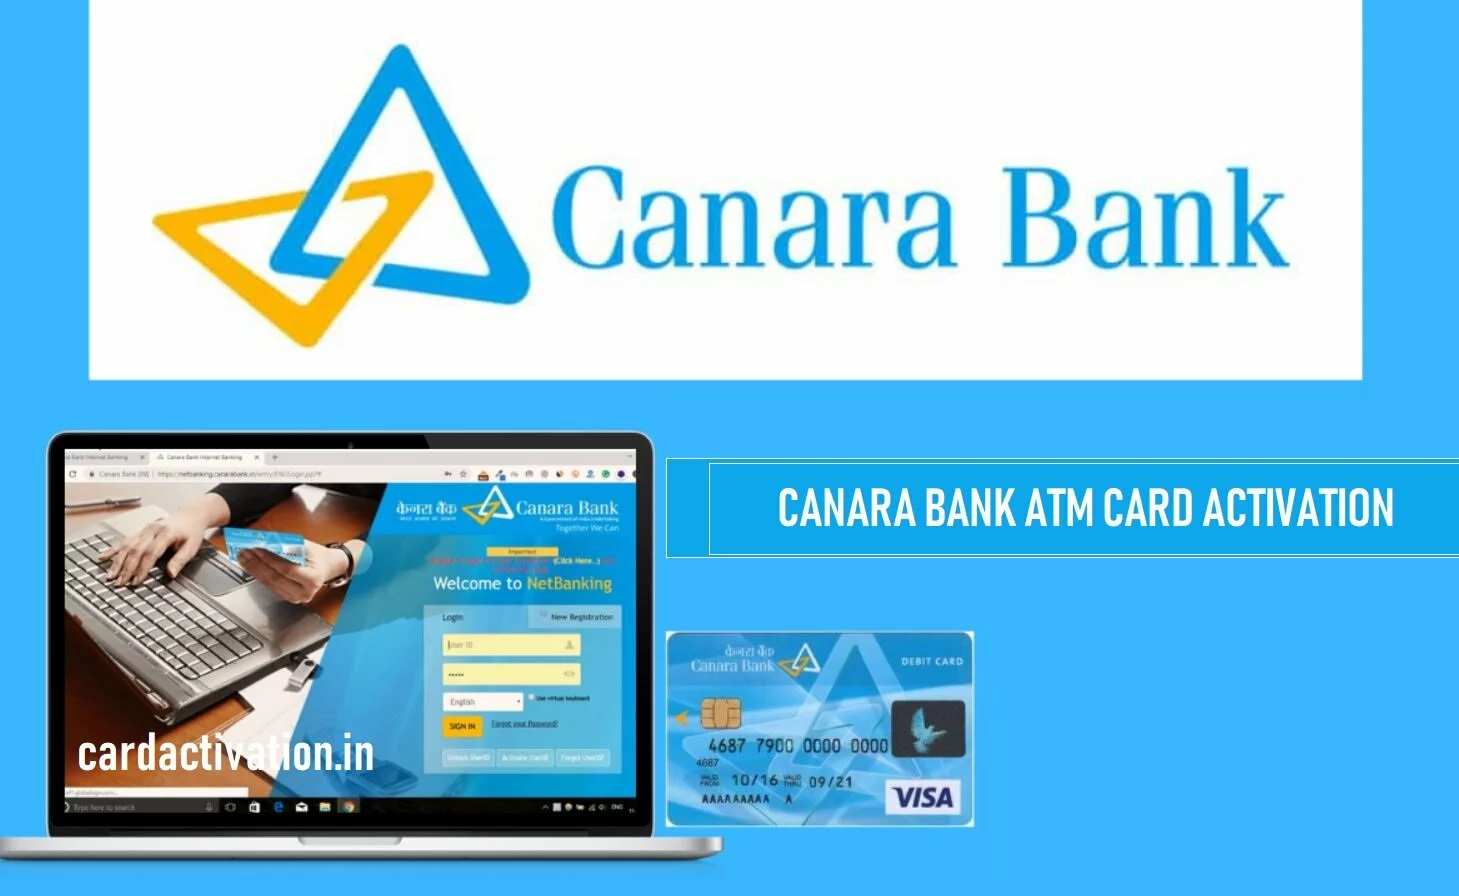 Canara Bank ATM Card Activation